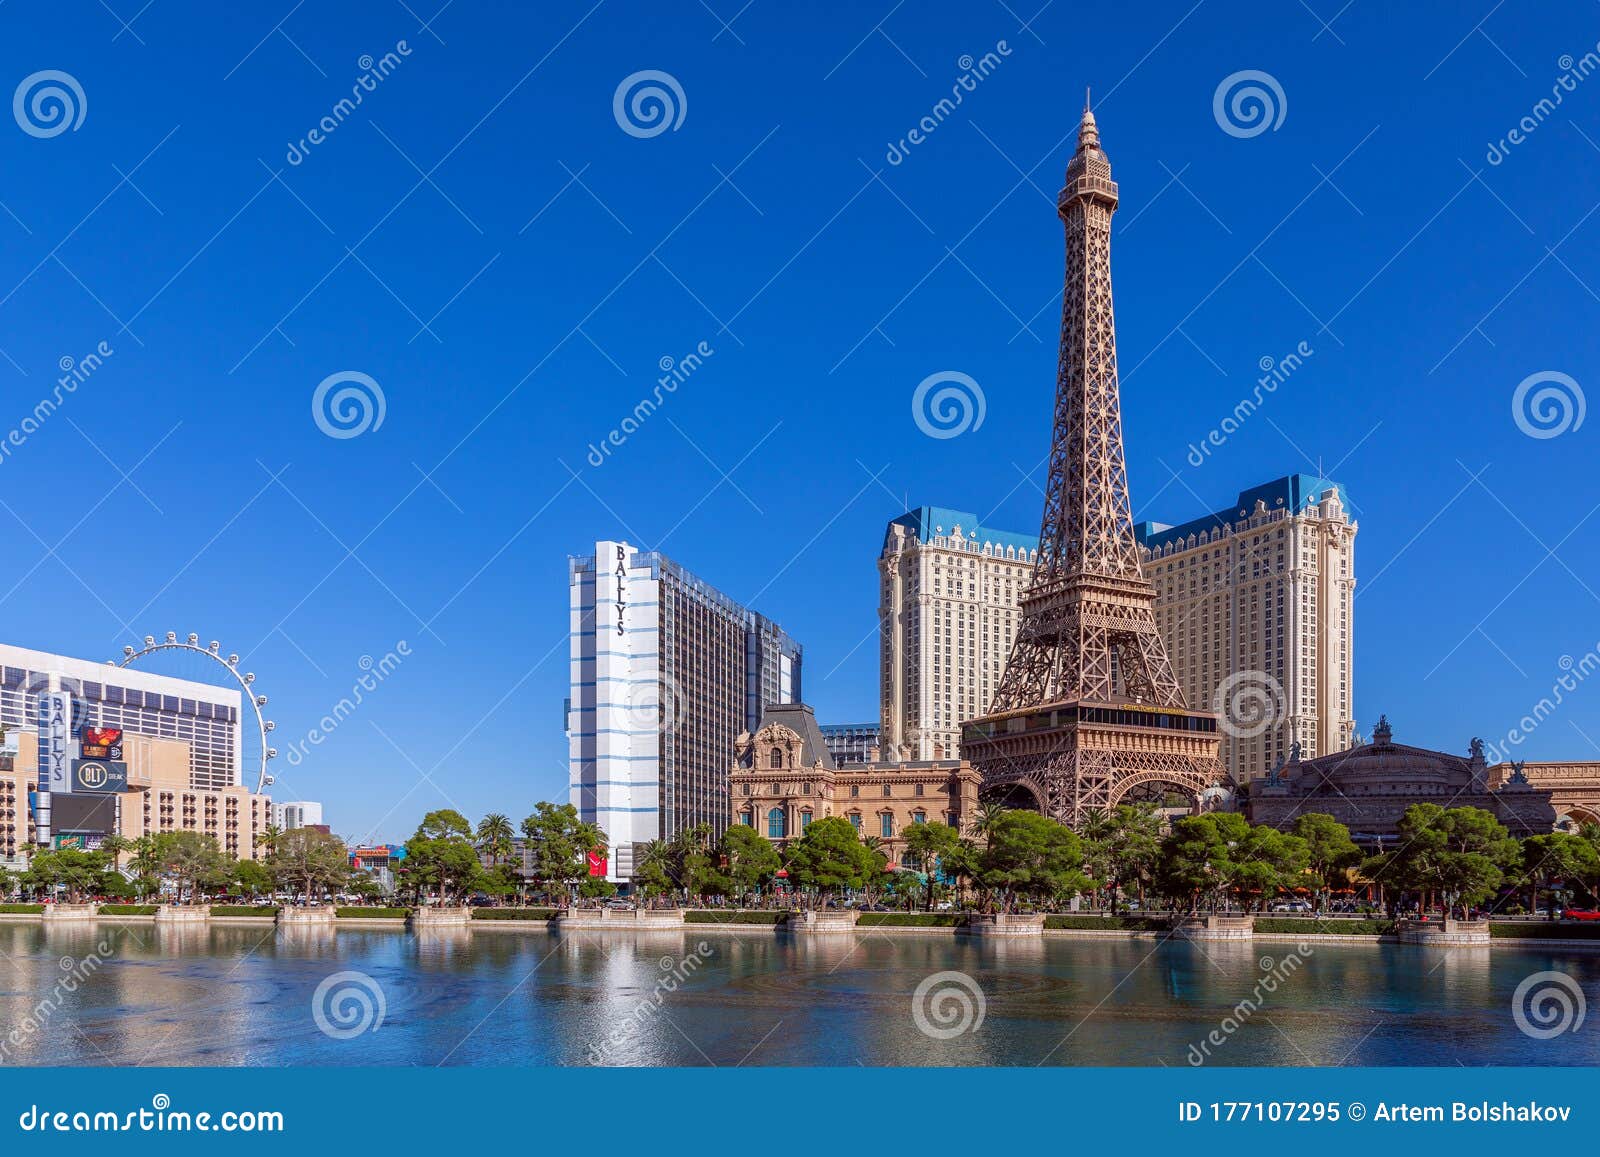 Las Vegas, Nevada, USA - October 31, 2019: View of Paris Las Vegas Hotel  Replica of Eiffel Tower in Paris and Hotel Ballys Editorial Image - Image  of america, destination: 177107295